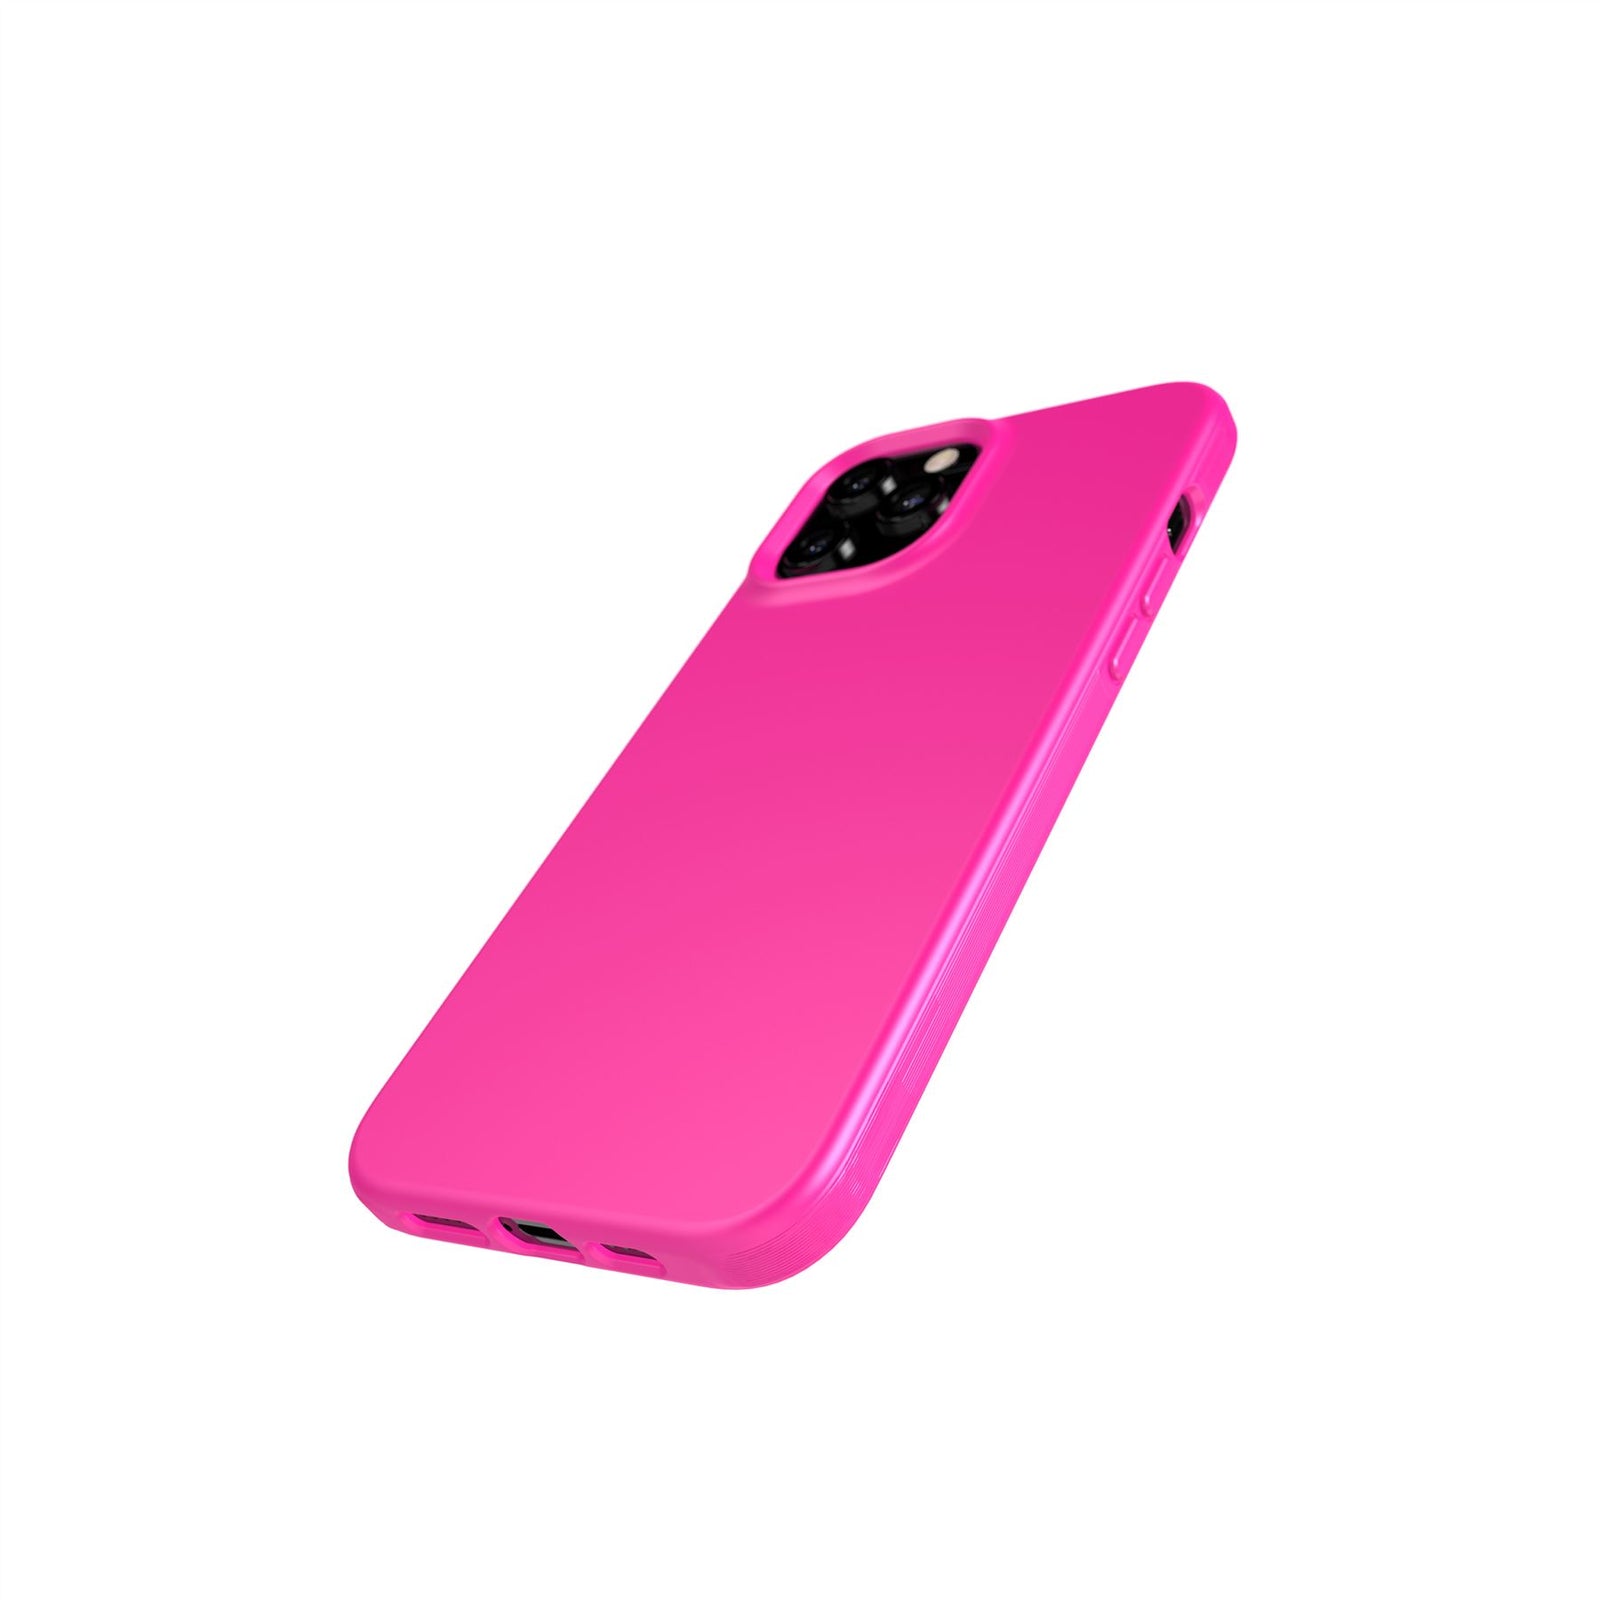 Evo Slim - Apple iPhone 12 Pro Max Case - Mystical Fuchsia